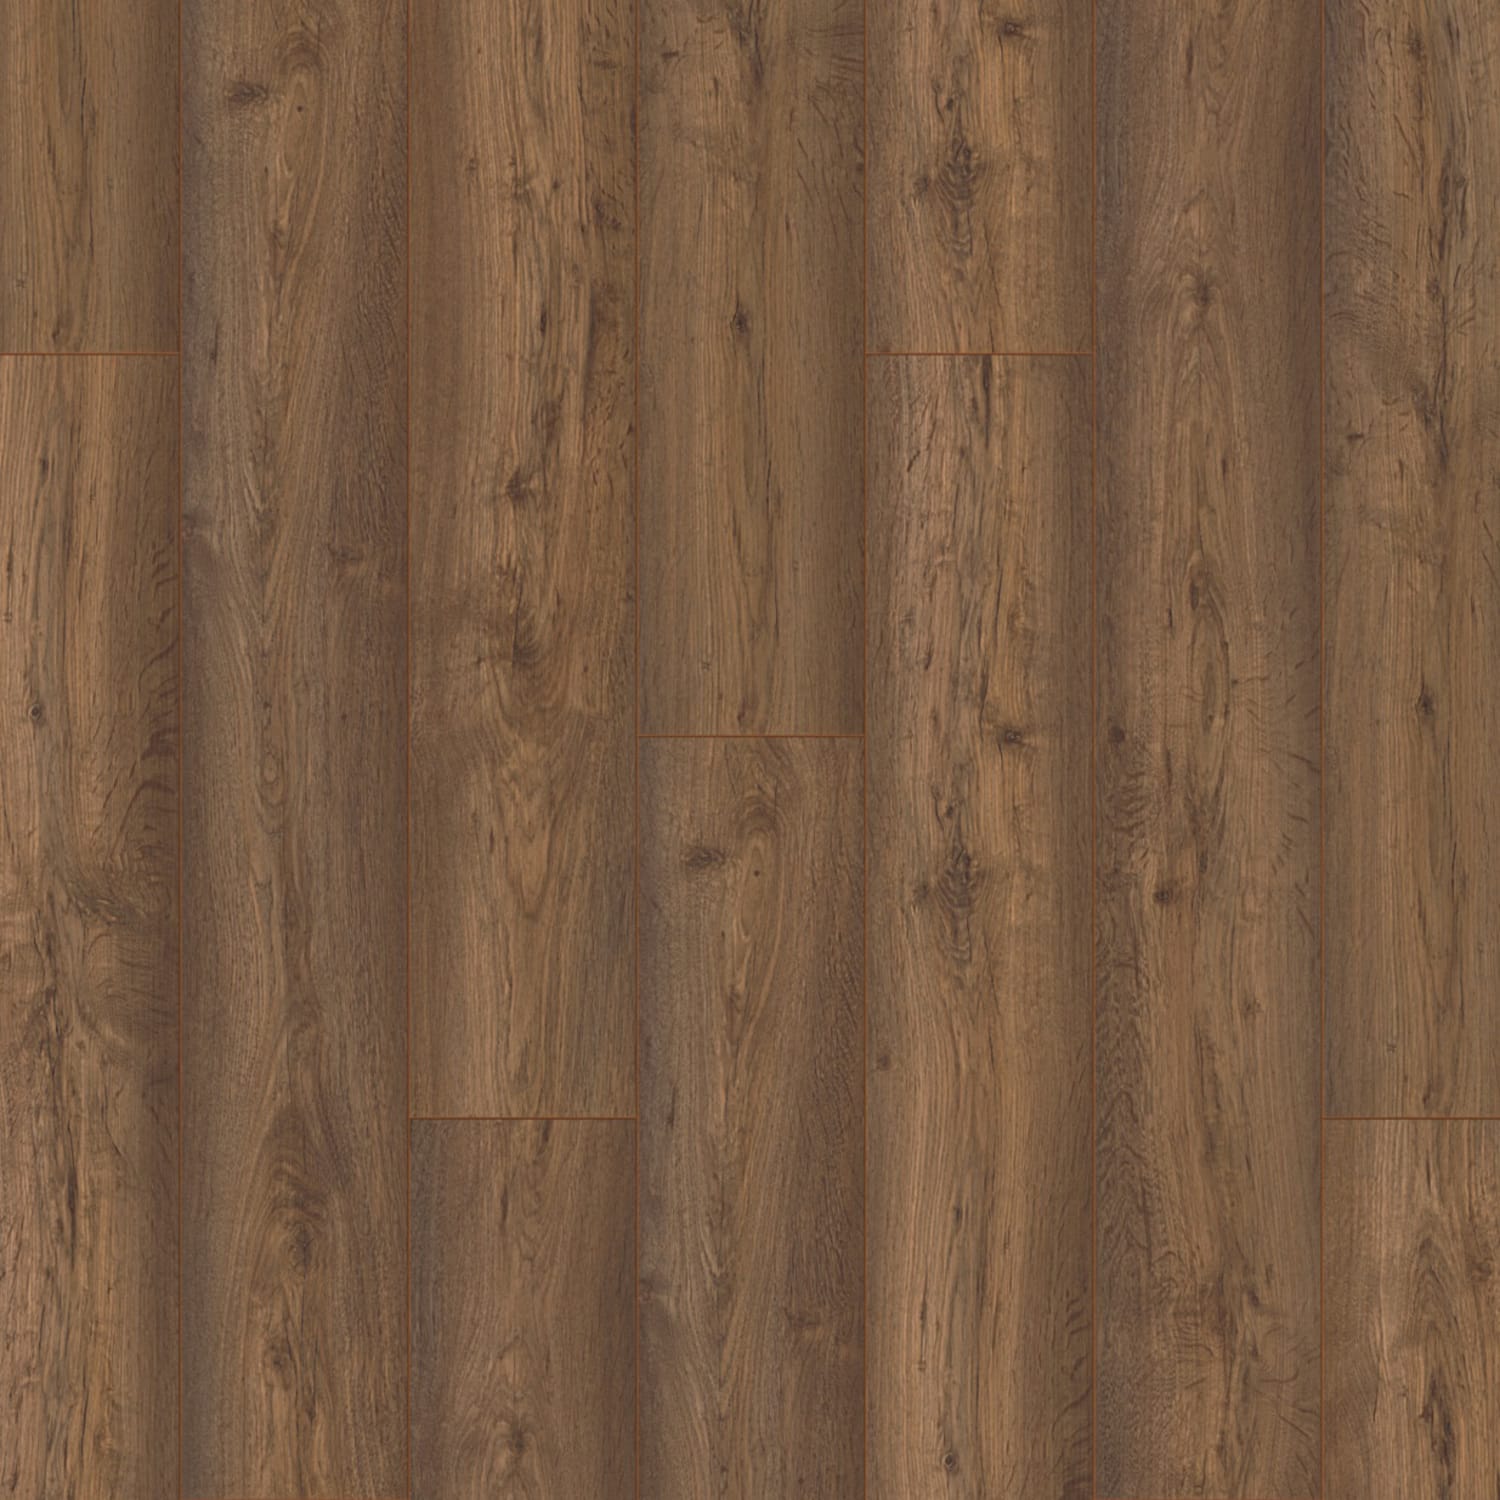 Give raket Usikker Acacia Brown Oak 10mm Laminate Flooring - 1.73m2 | Wickes.co.uk